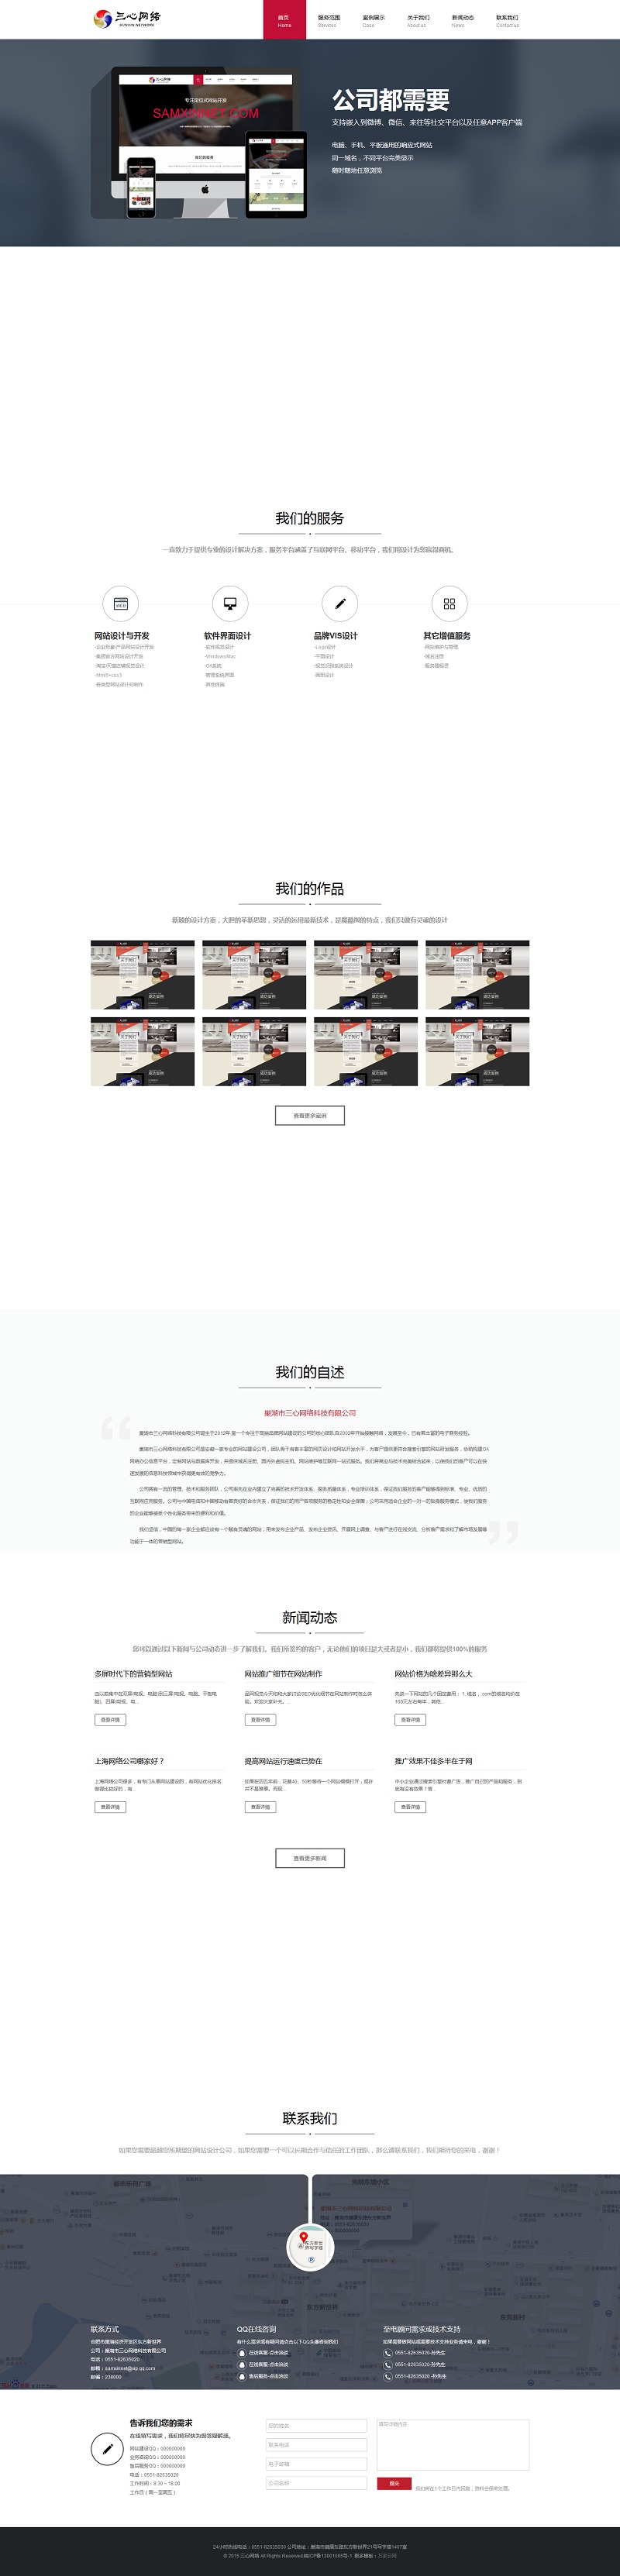 HTML5网络科技公司响应式中文网站模板【精品】